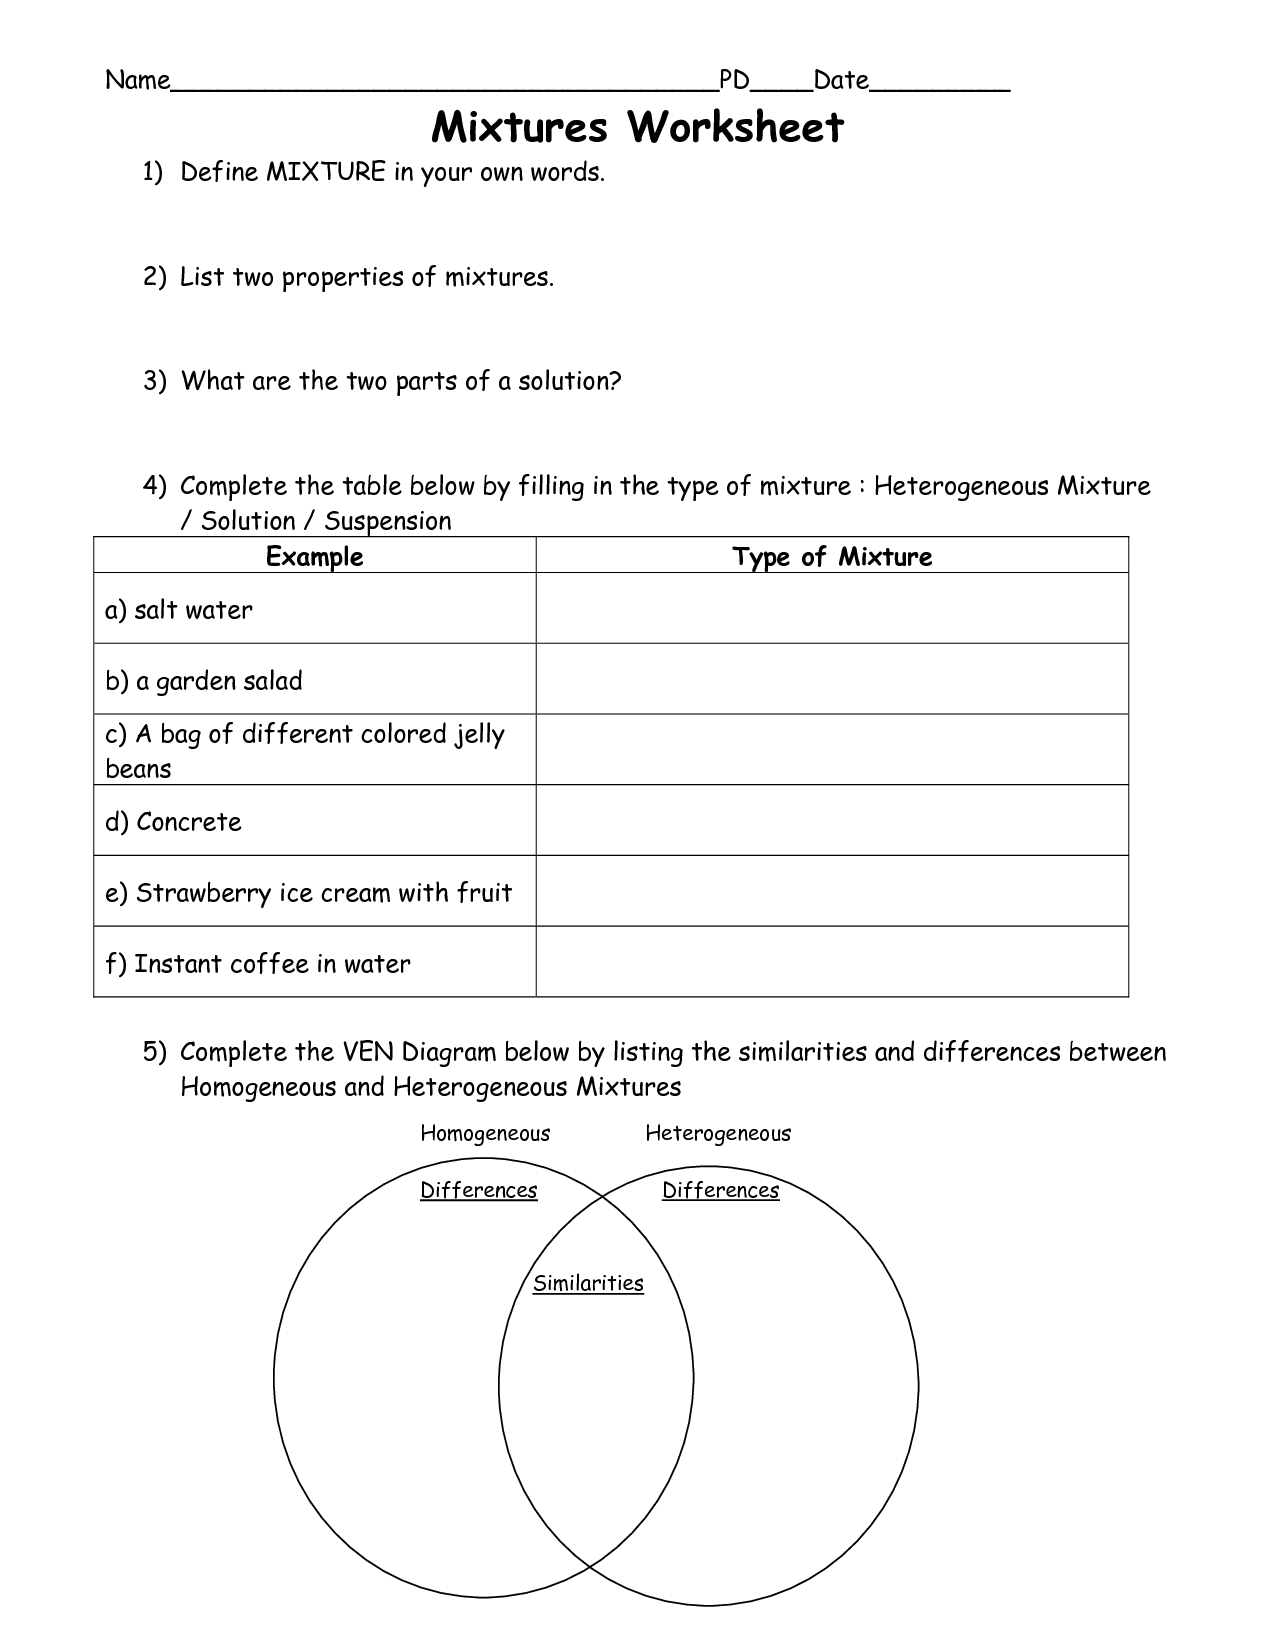 mixtures-worksheet-5th-grade